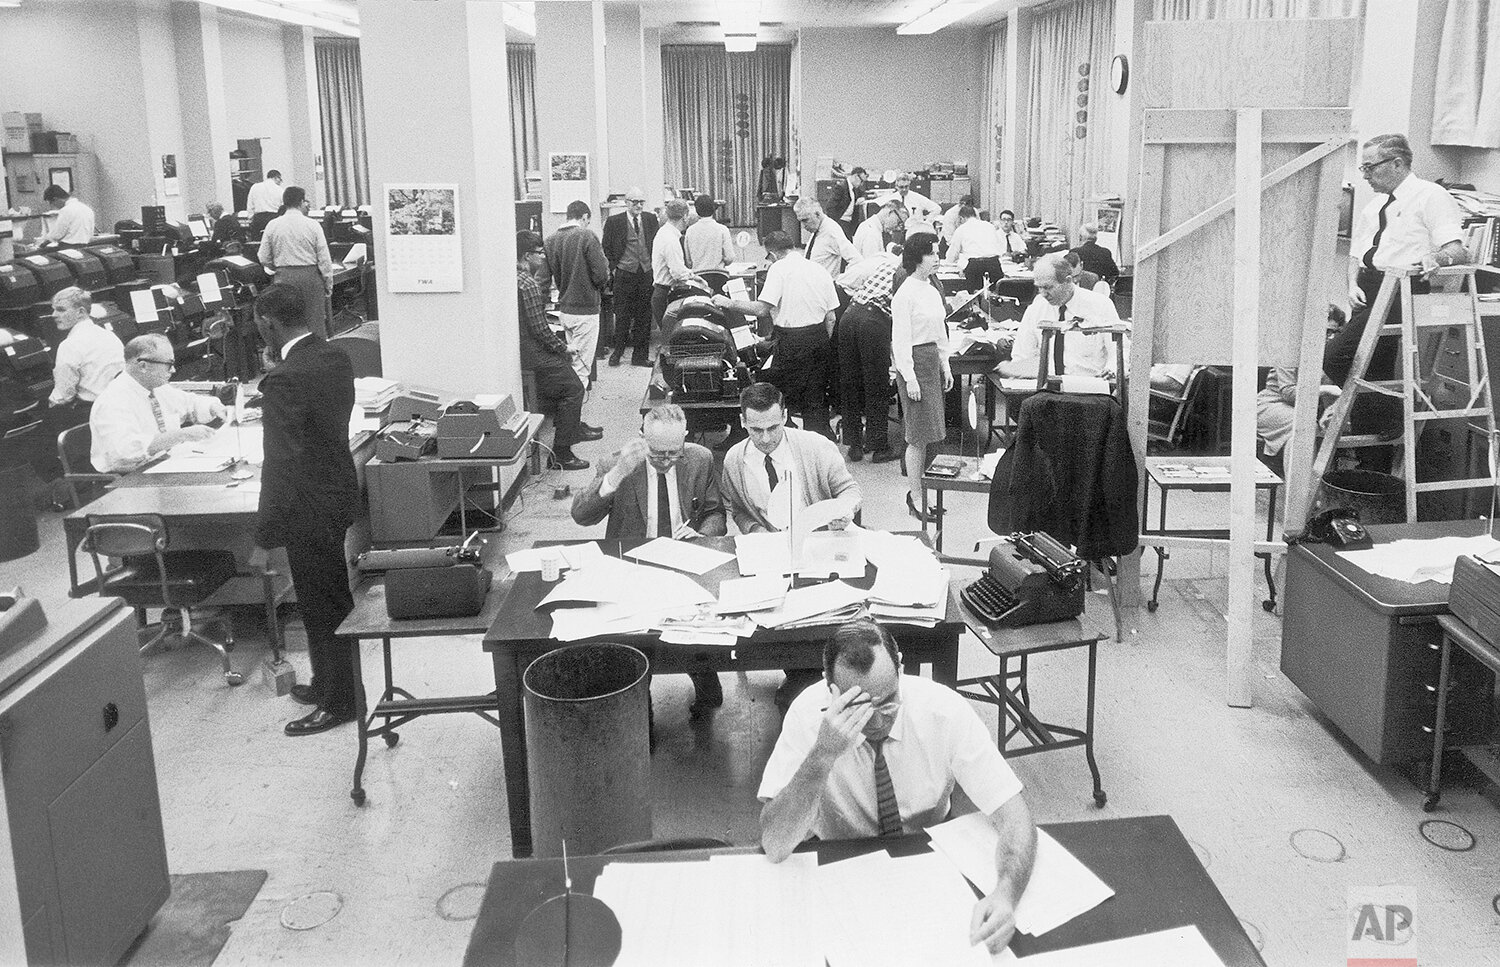  Staffers work on election night at the Washington bureau of The Associated Press on Nov. 3, 1964. (AP Photo/File) 